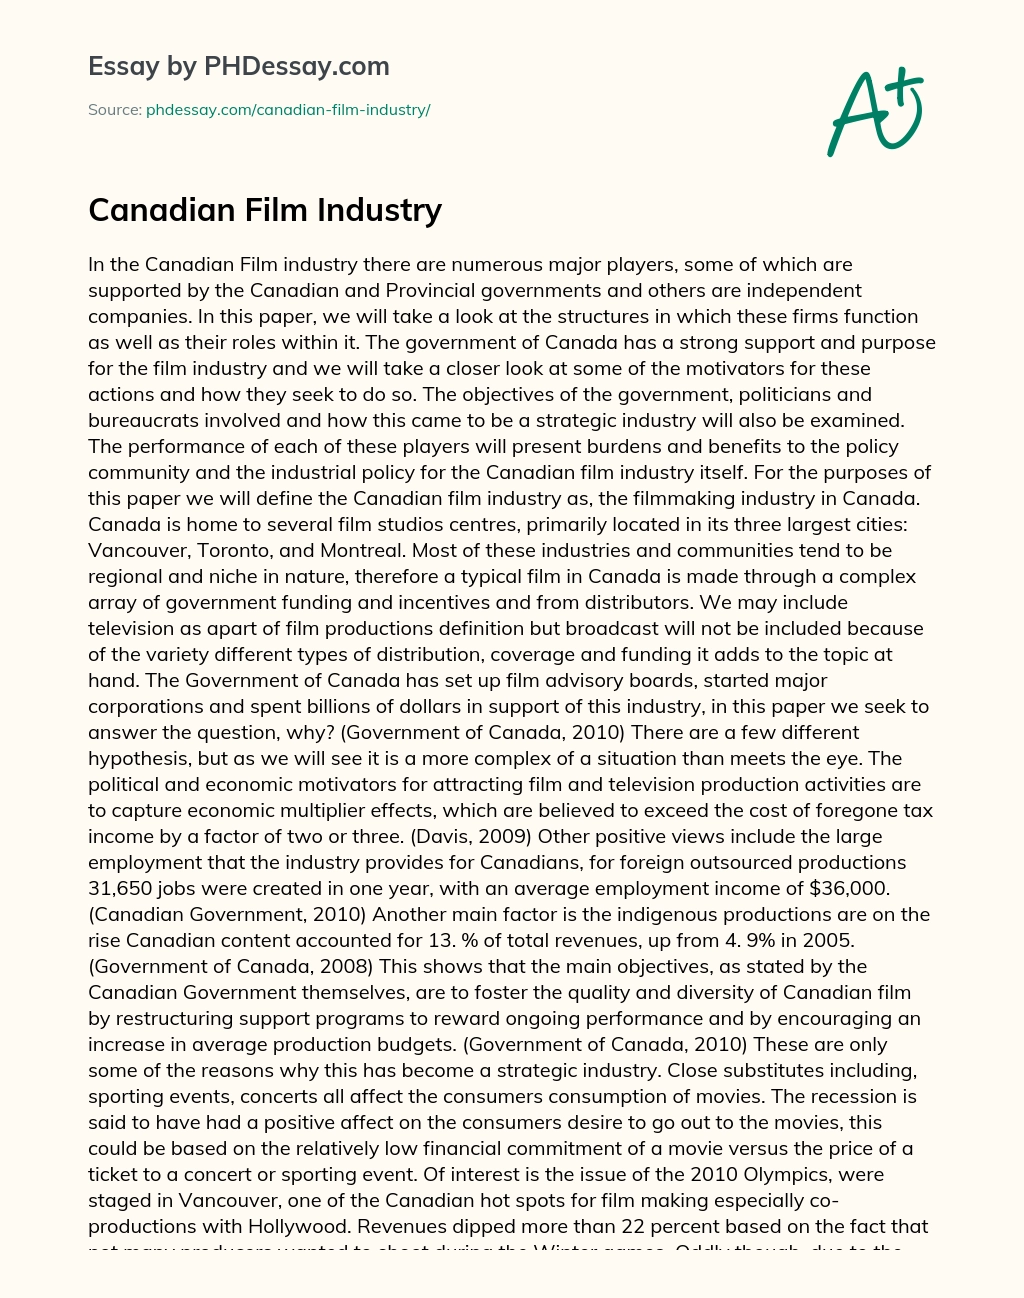 Canadian Film Industry essay